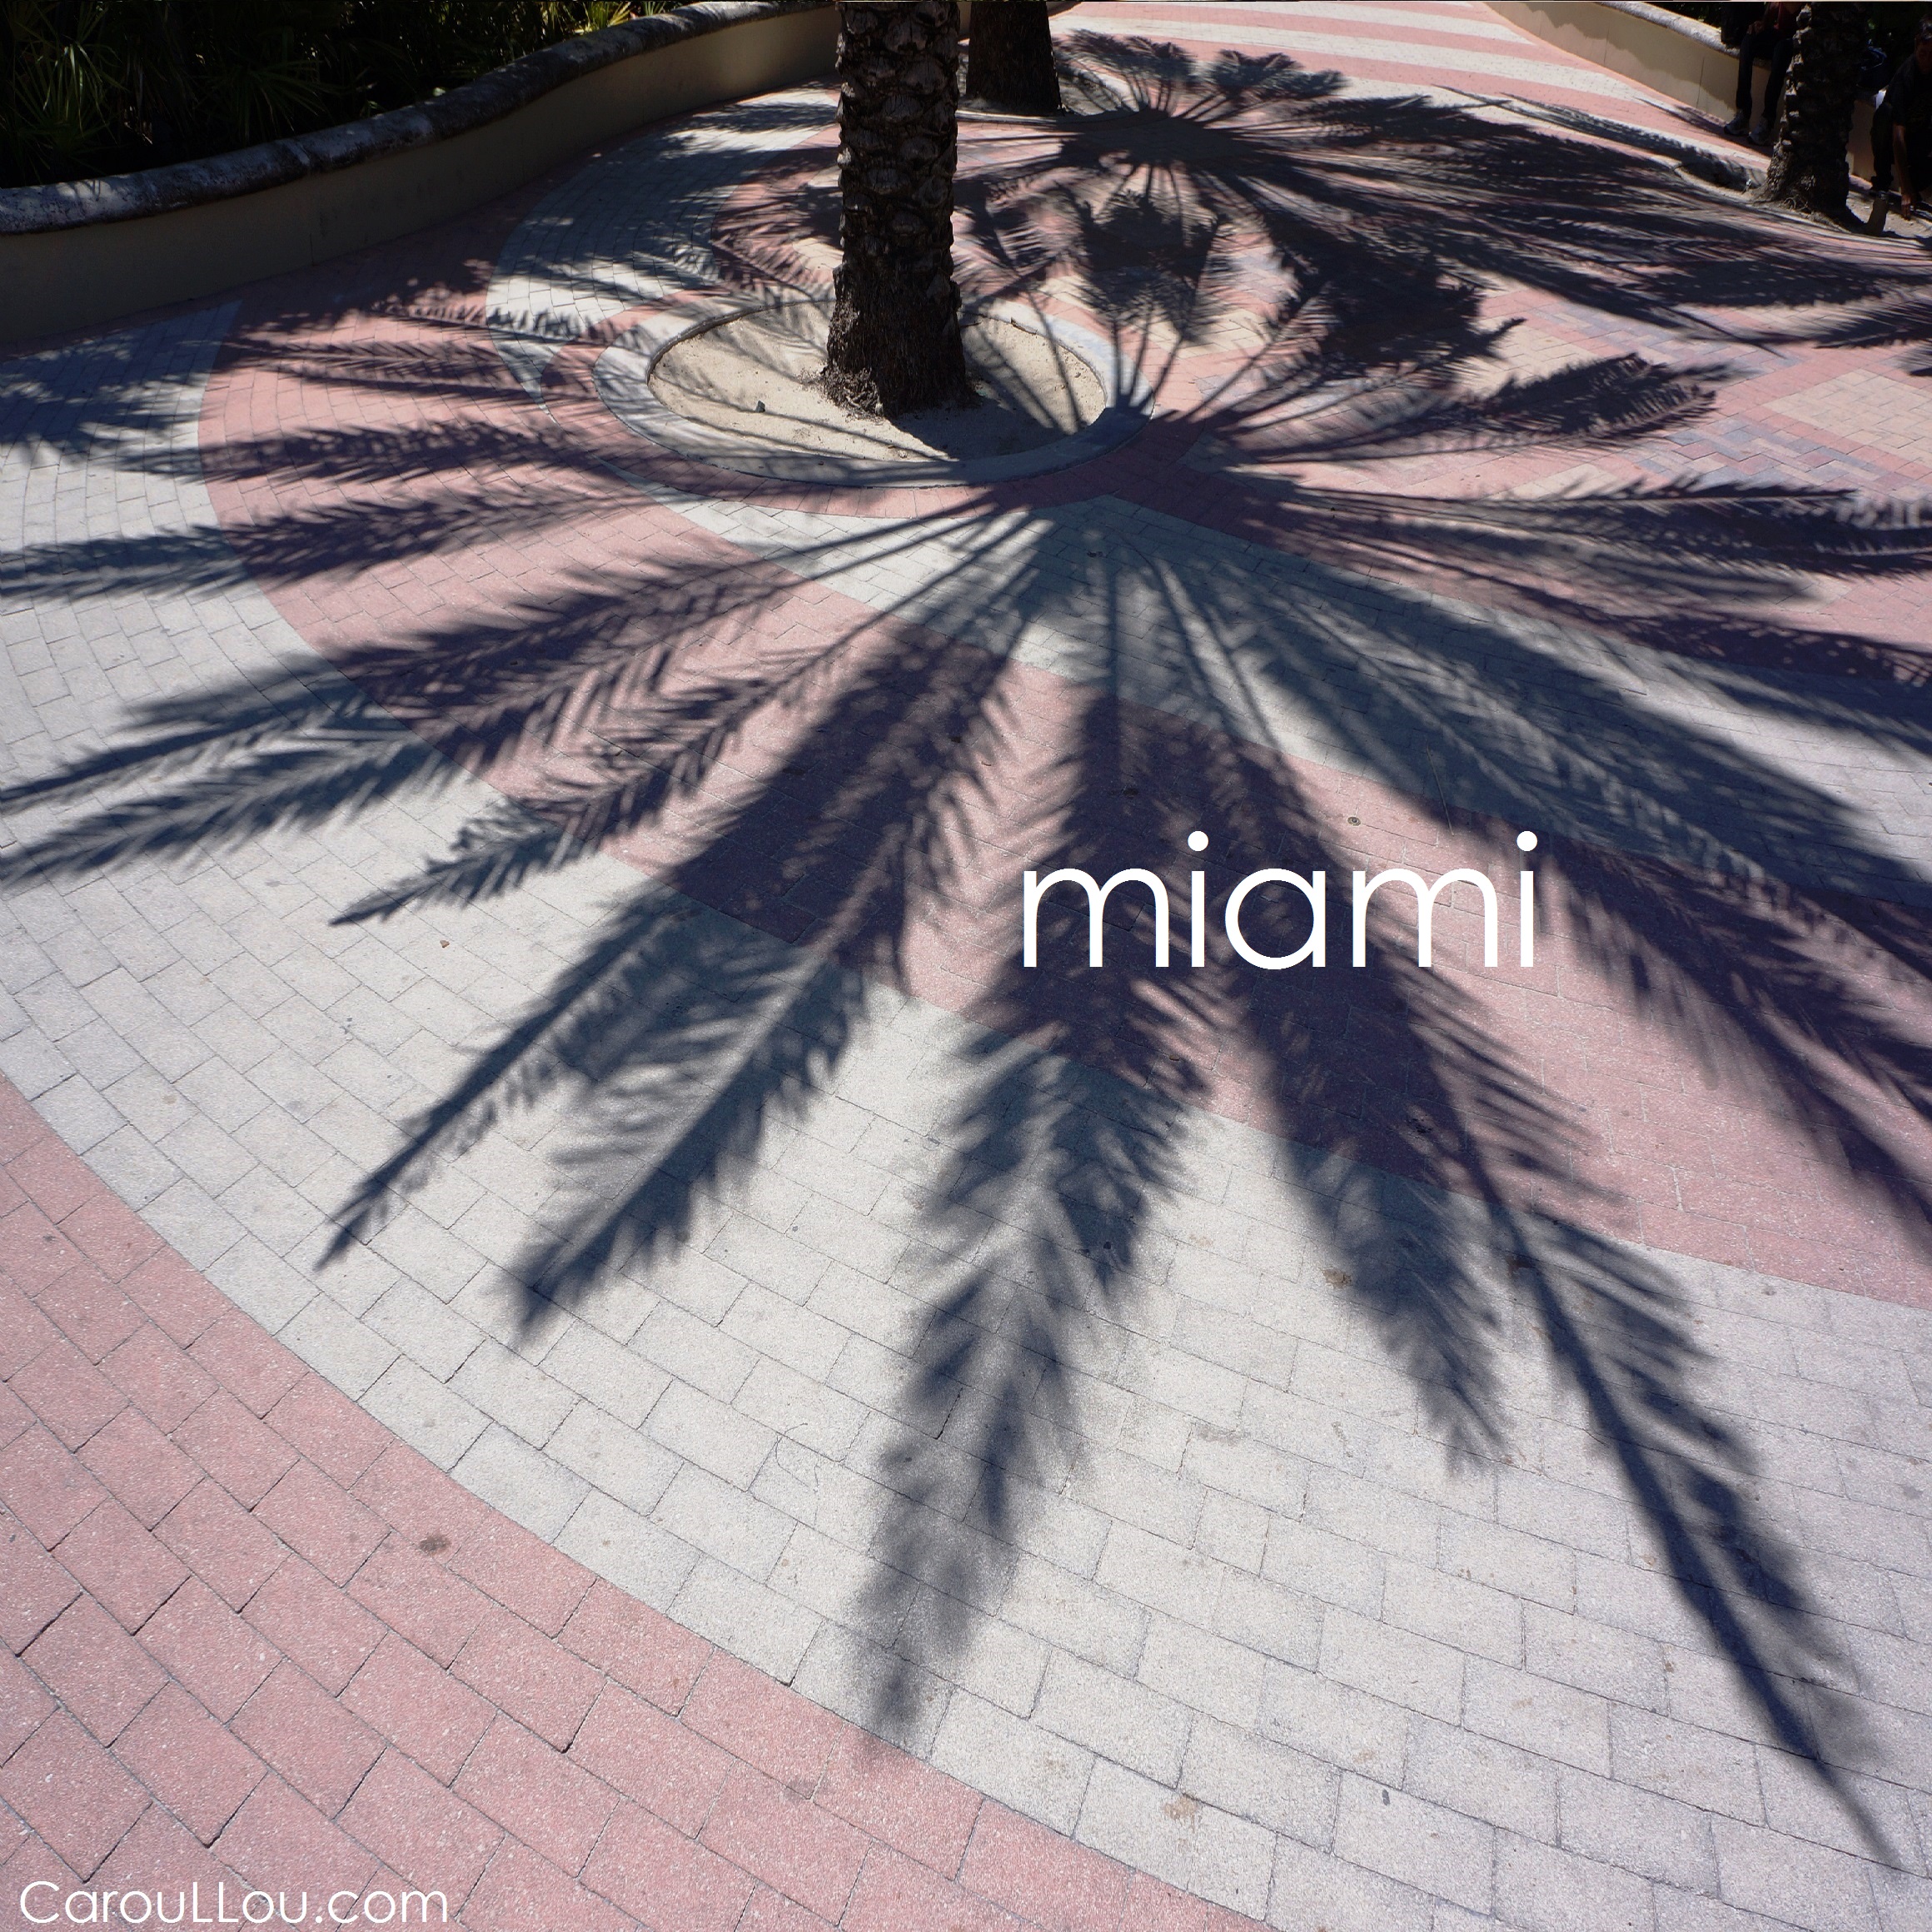 CarouLLou.com Carou LLou in Miami South Beach palm shadow +-